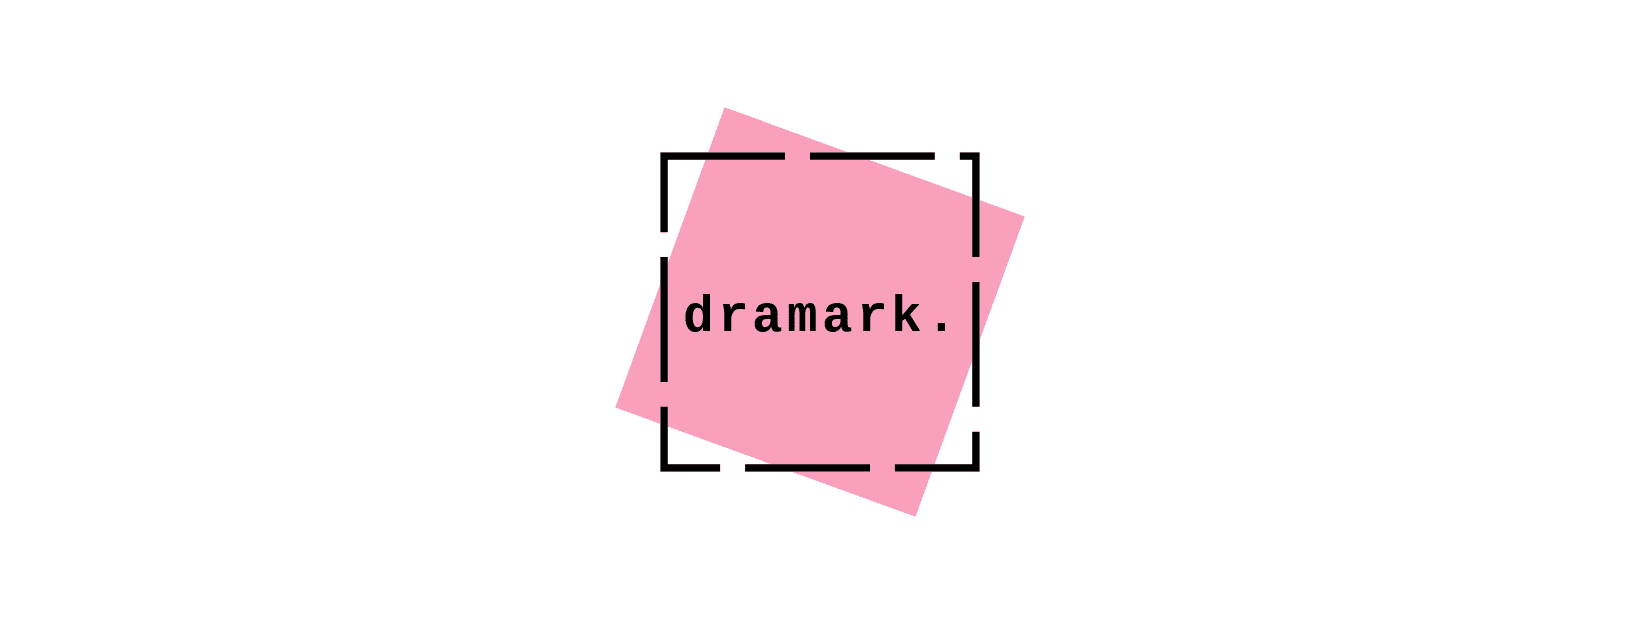 dramark.【ドラマーク】